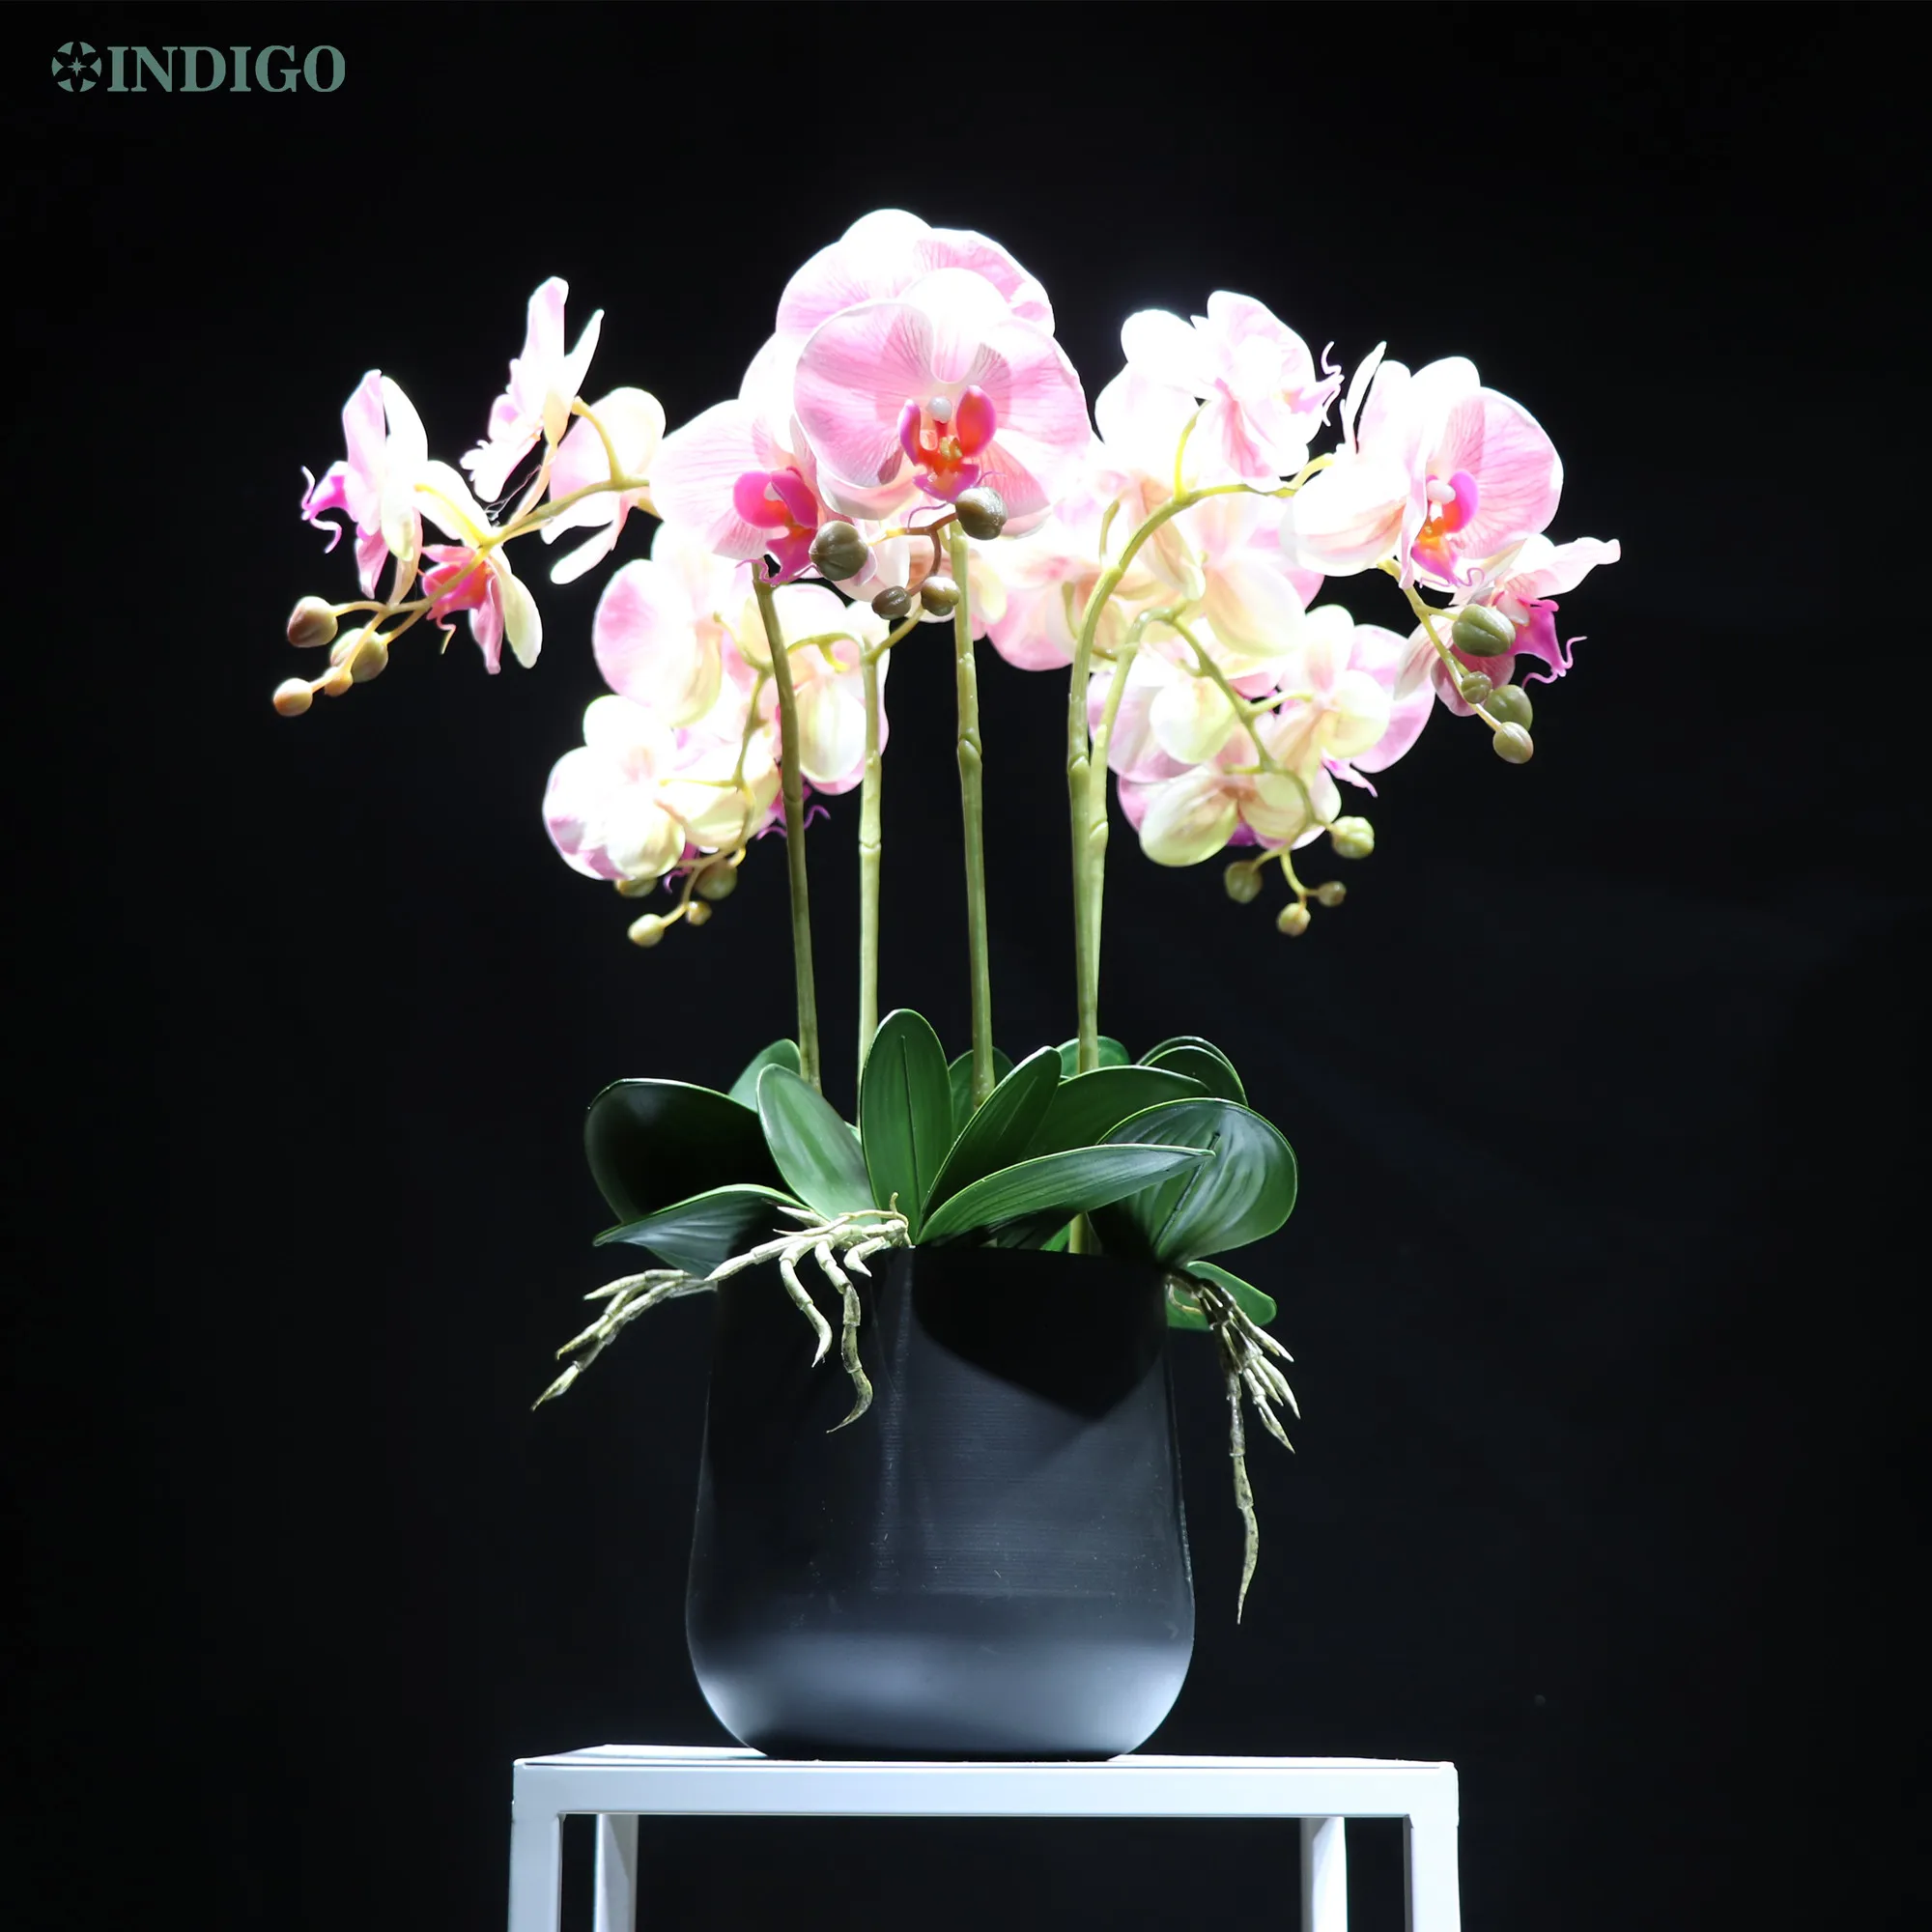 Pink Orchid DIY Flower Arrangment (5PCS Orchid+3PCS Leaves+Moss+Vase) 3D Real Touch Office Decoration Centerpiece - INDIGO